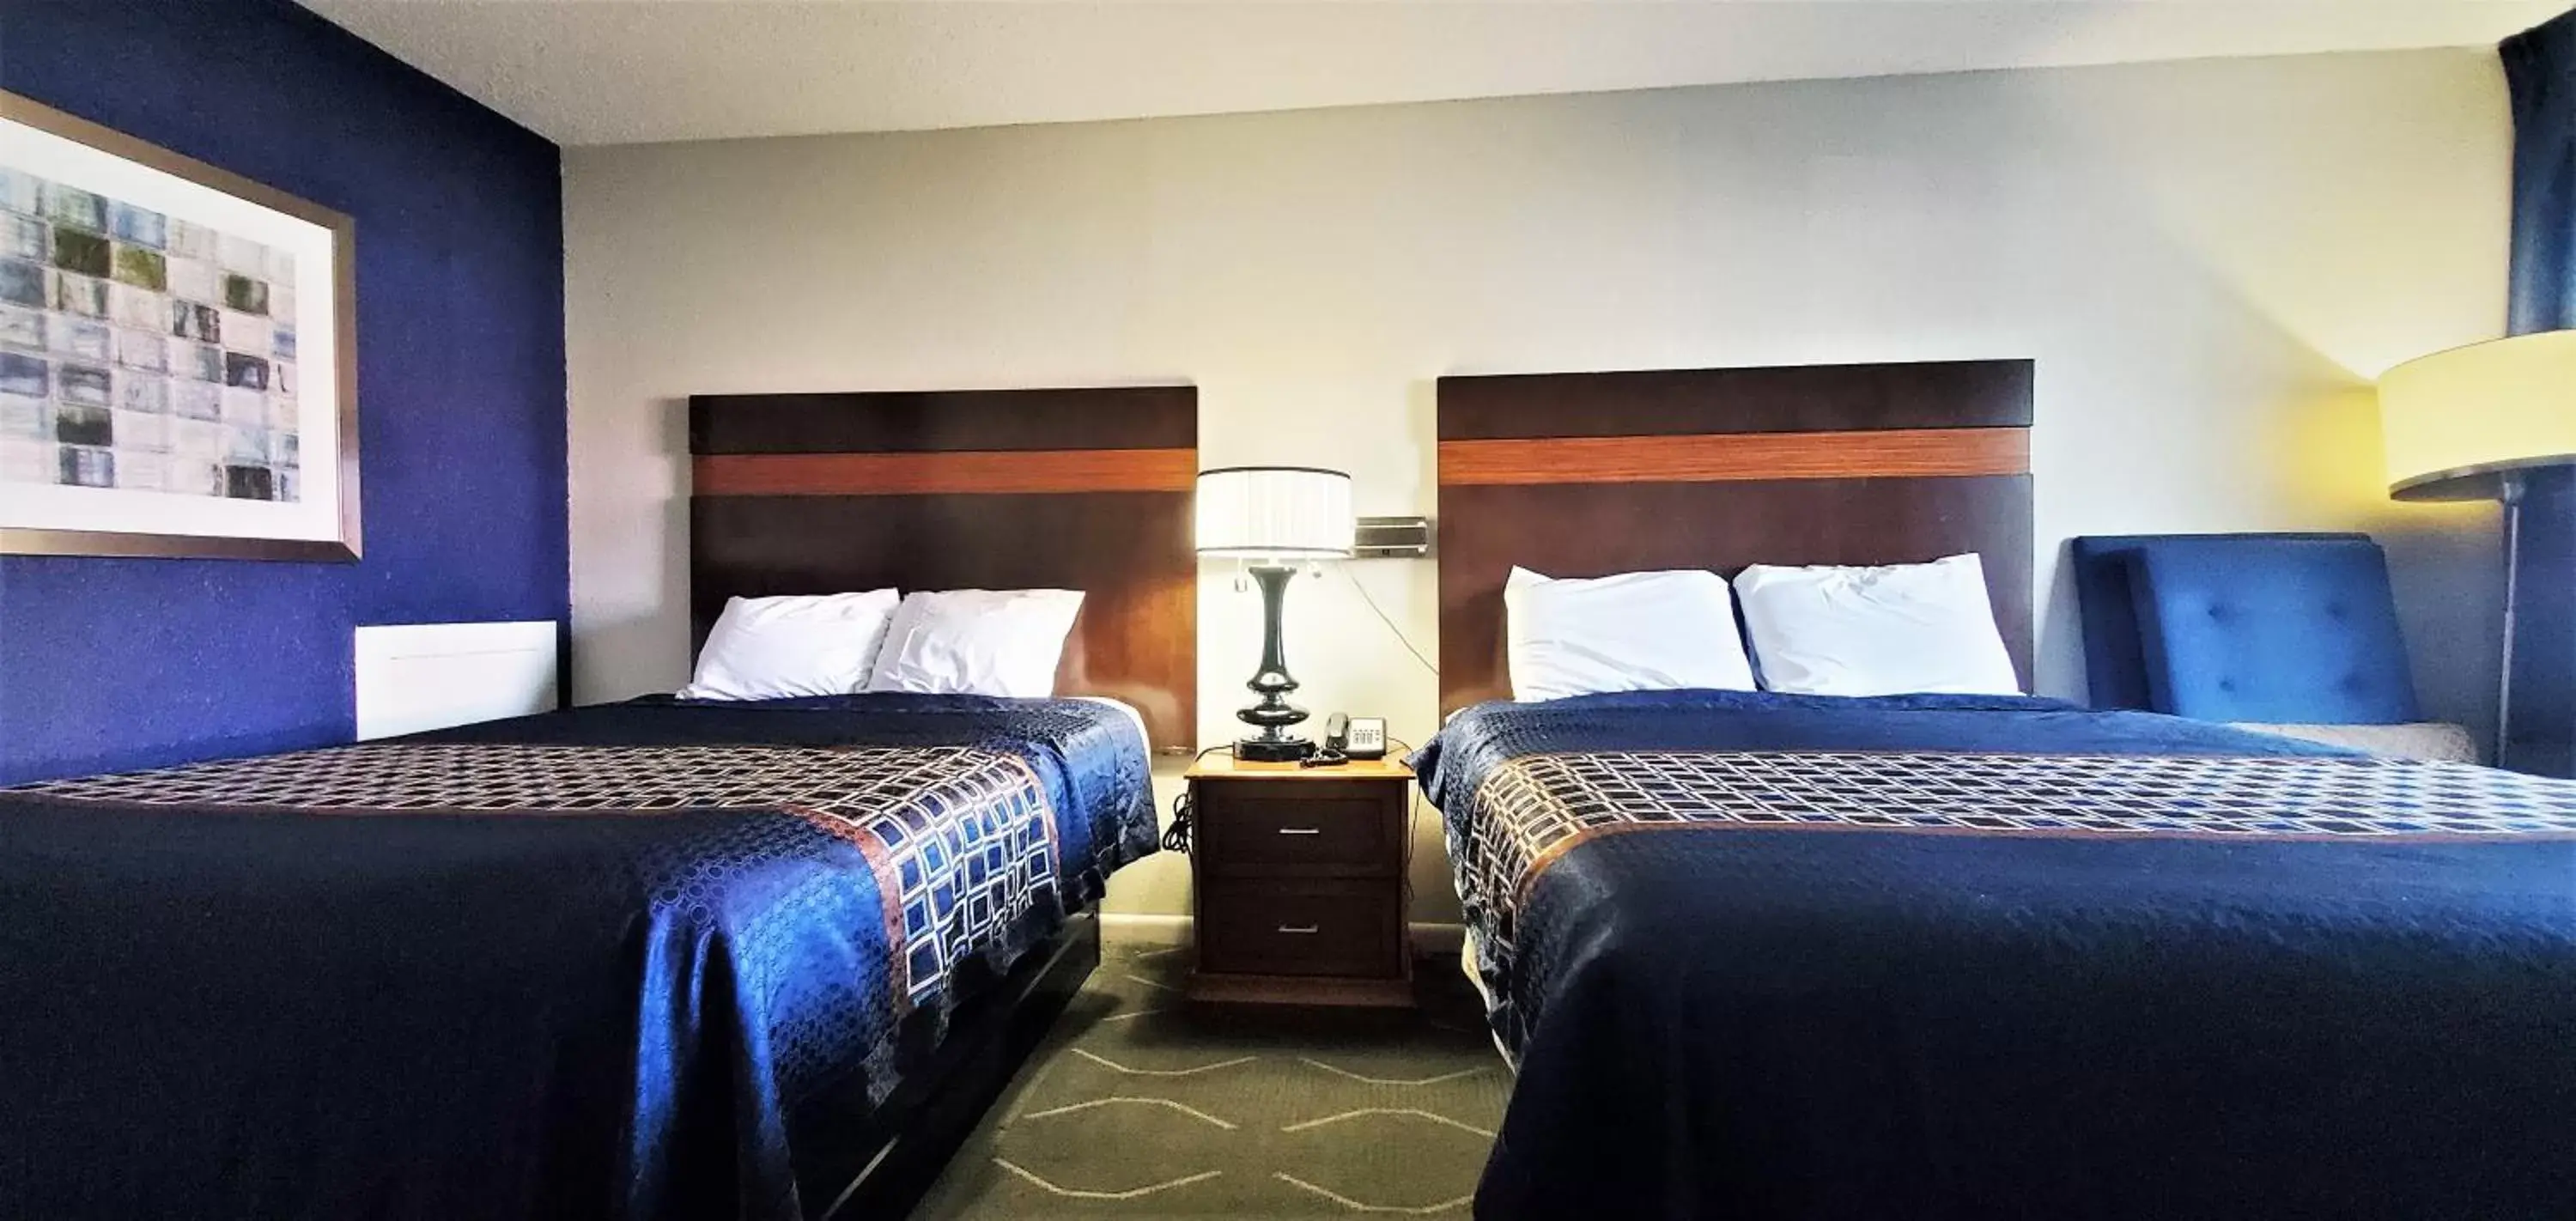 Bedroom, Bed in Economy 7 Inn- Newport News